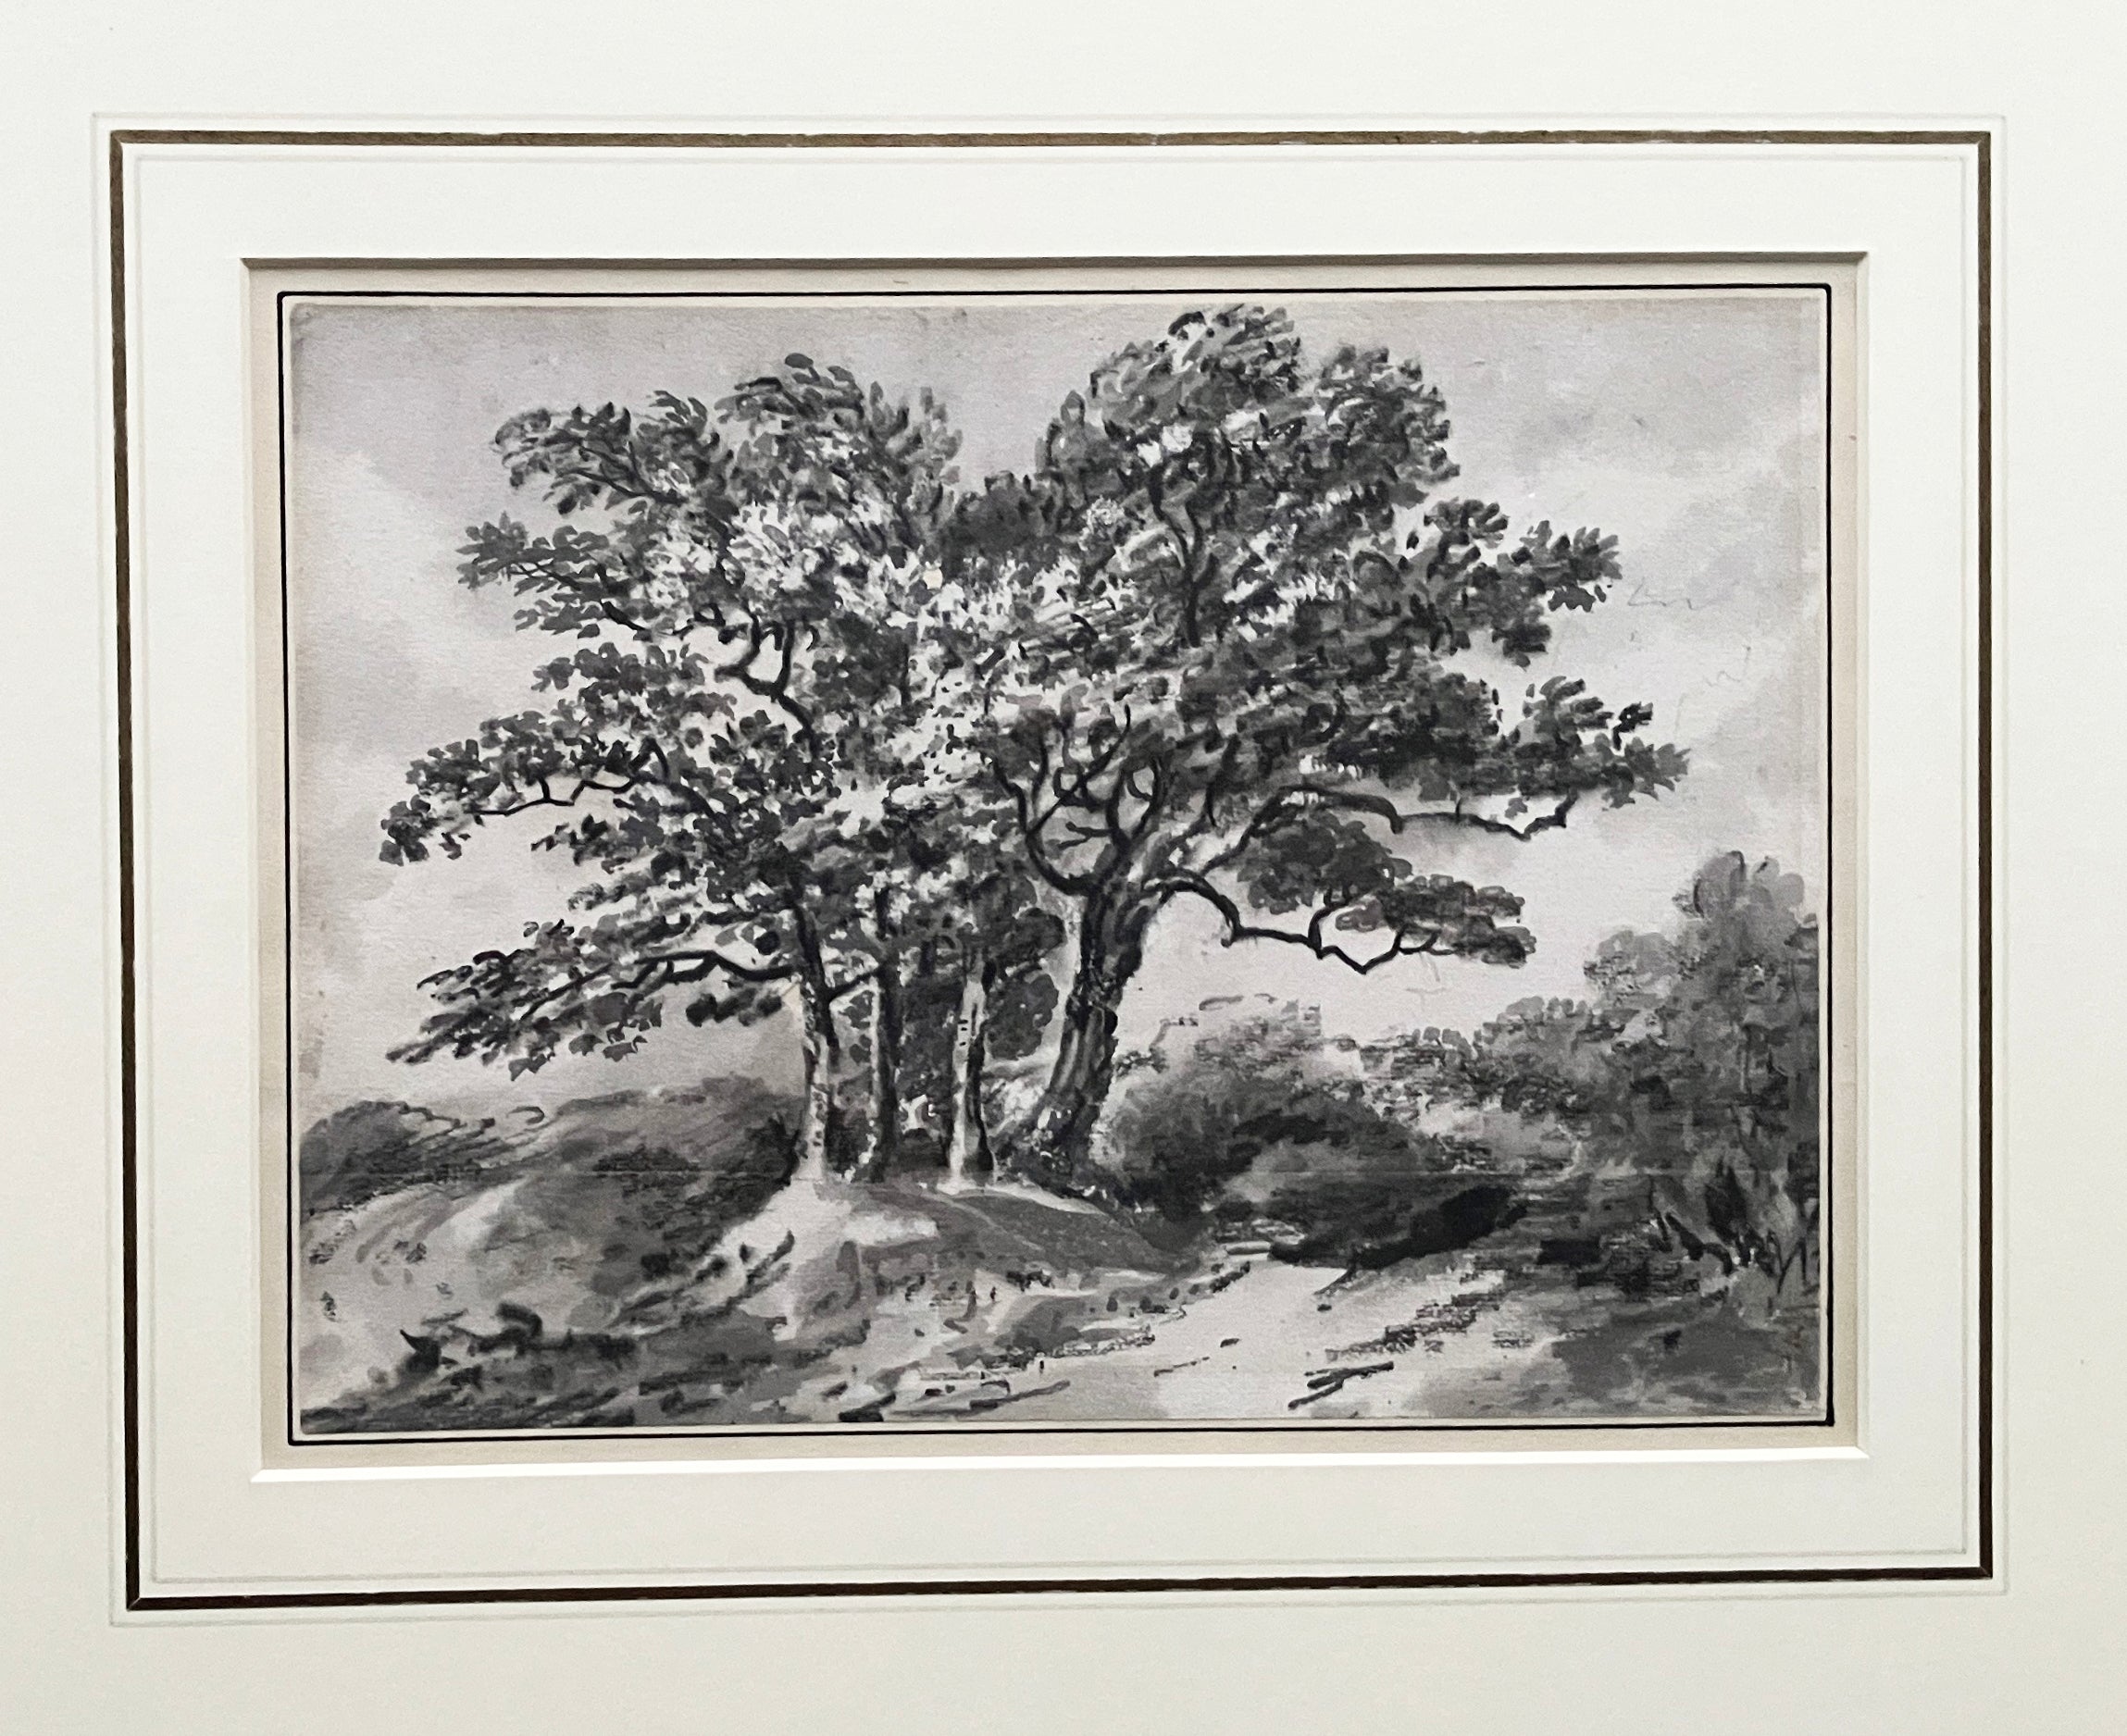 Dr Thomas Monro (c.1790s). Black chalk, wash and brush – trees on mound